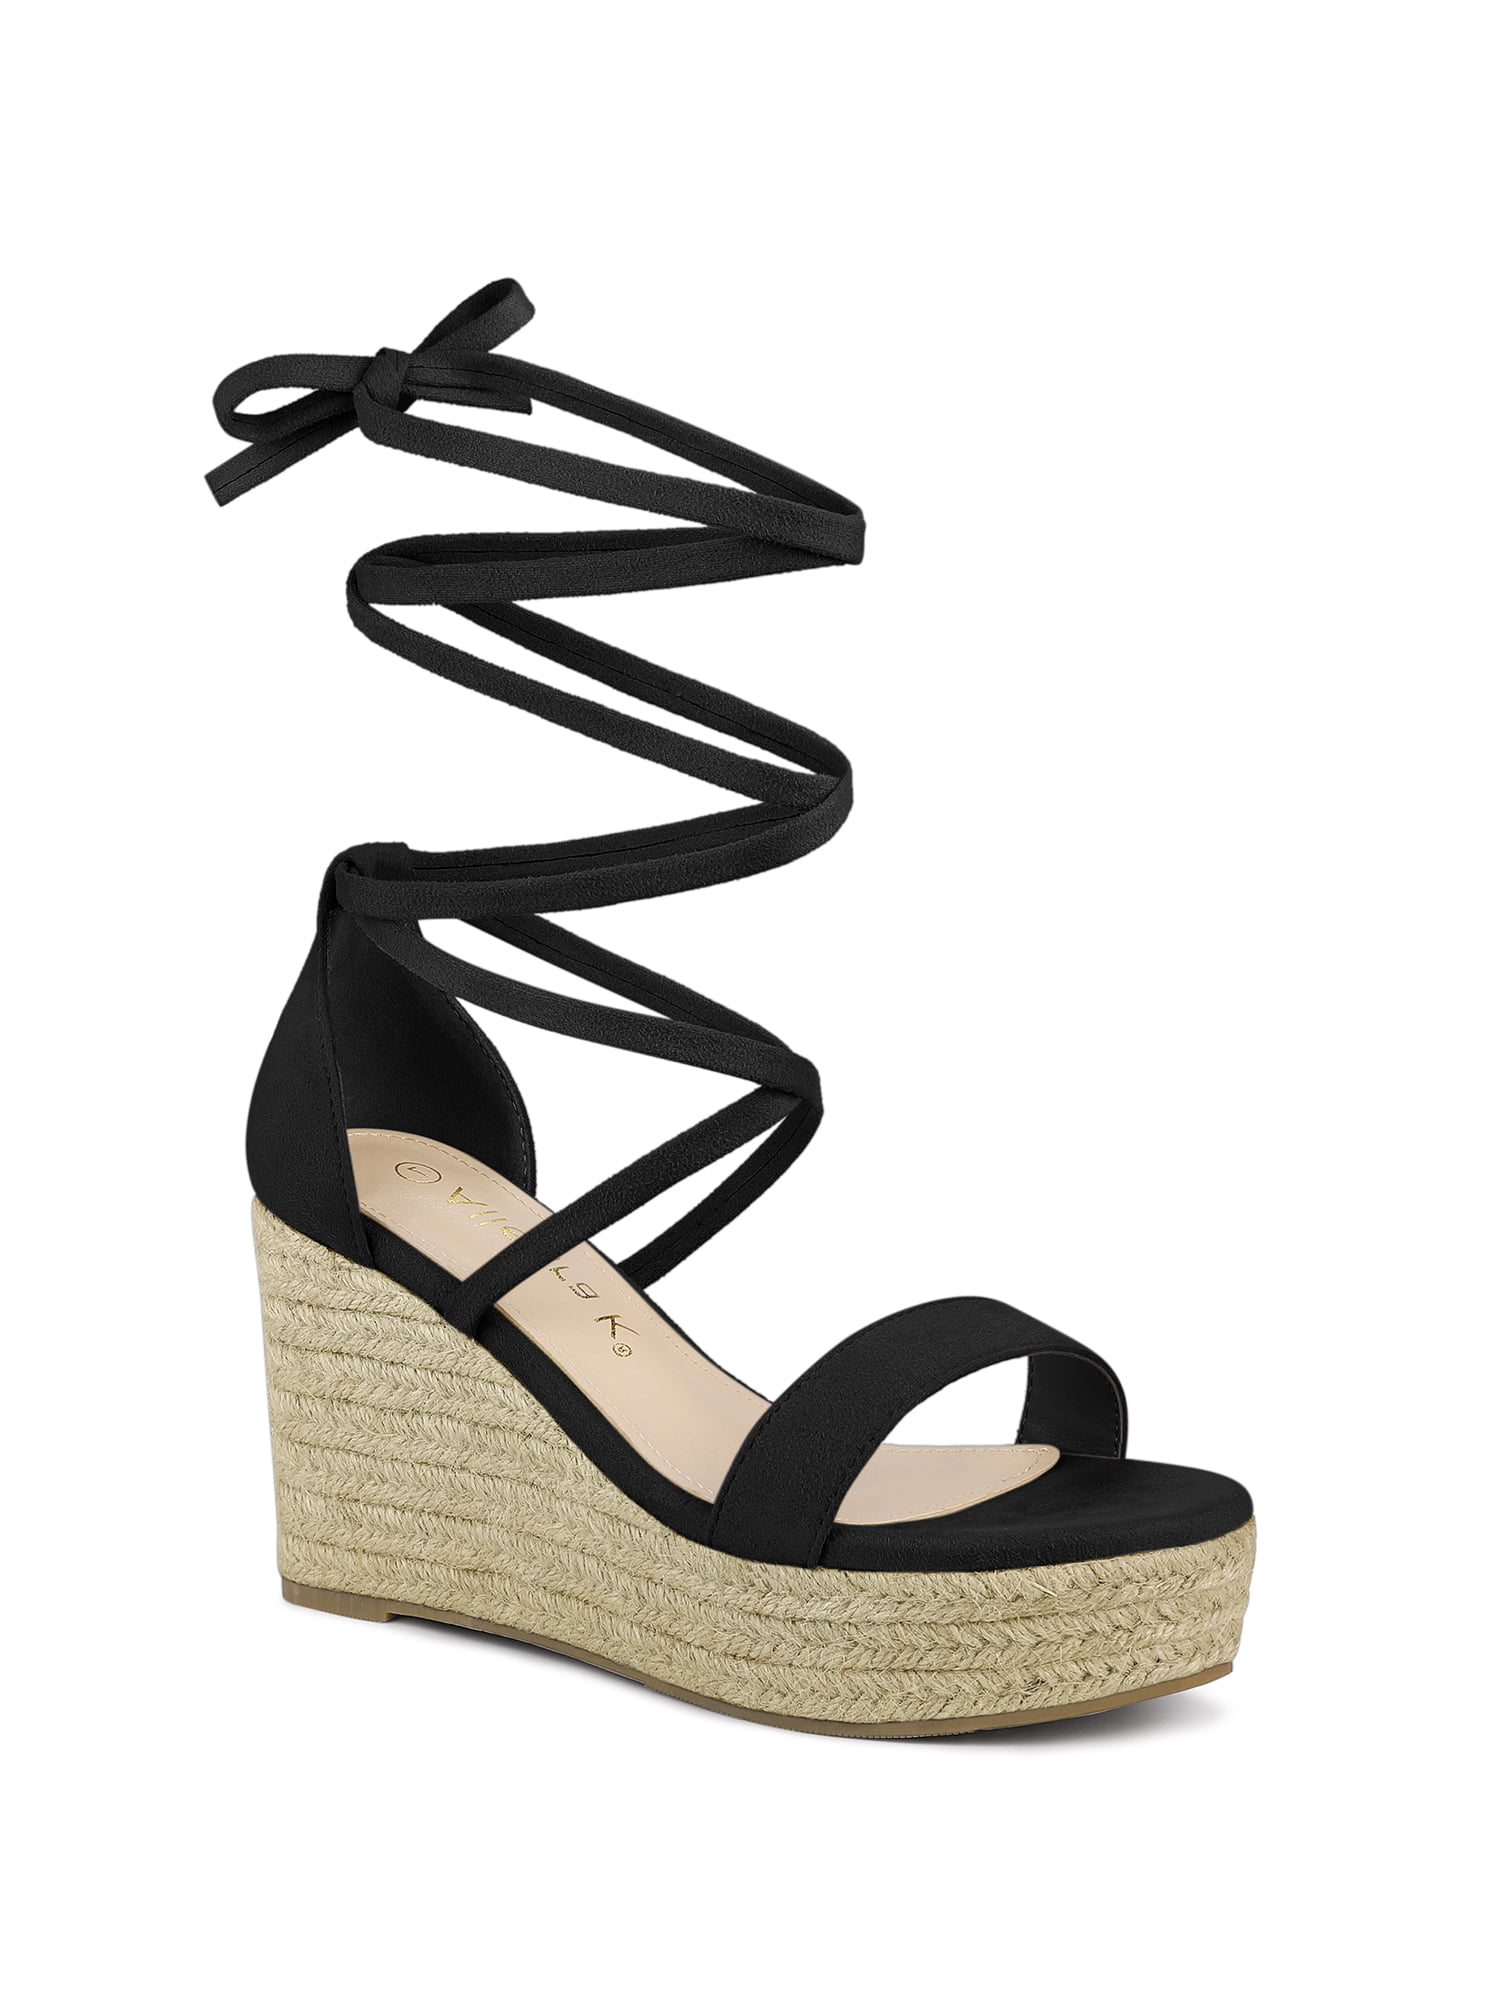 TOPSHOP HARI Espadrille Wedge Wedges Sandals Shoes Size UK 3 4 5 6 7 8 FREE P&P 